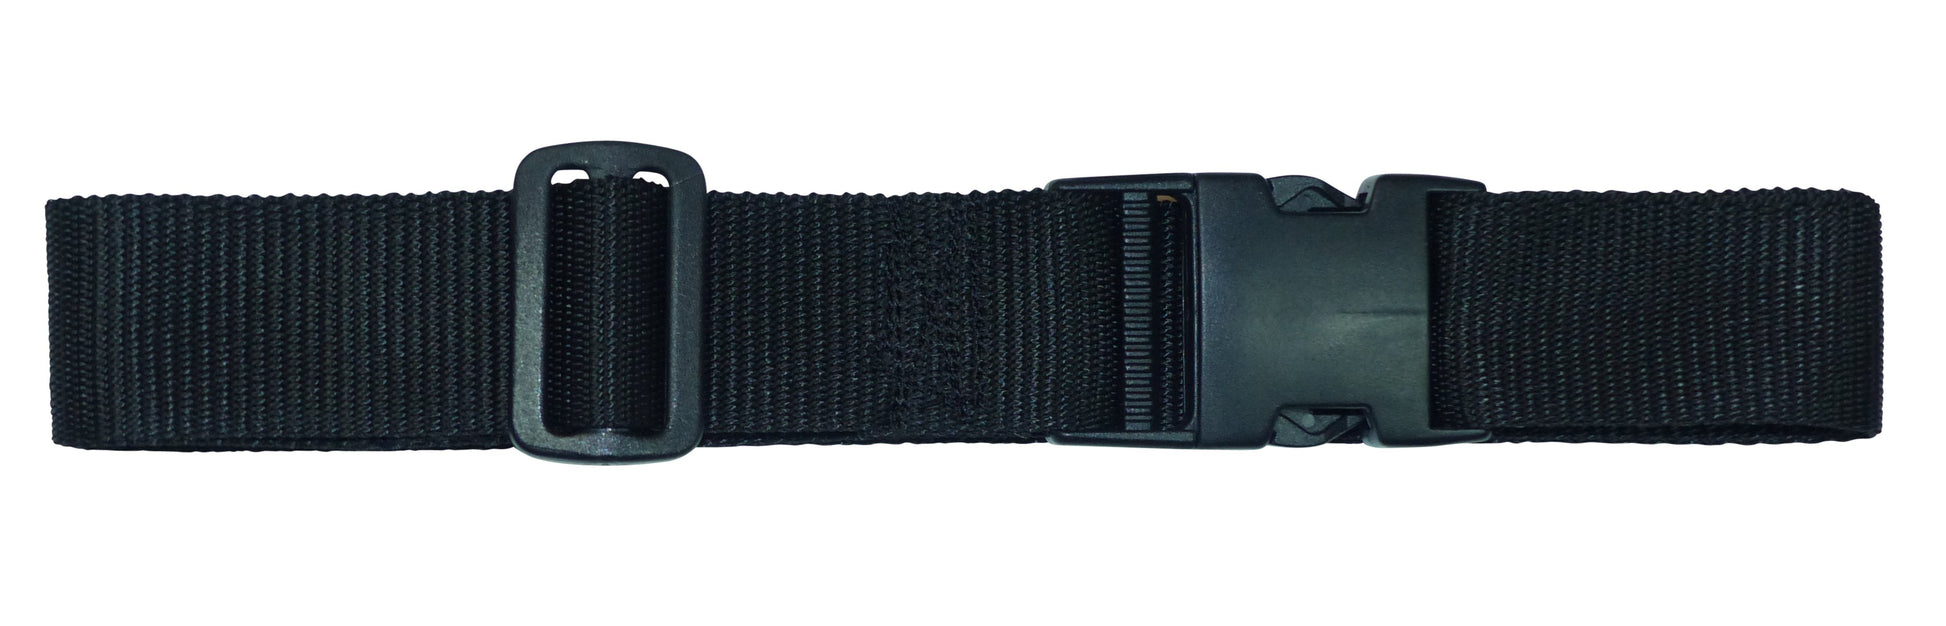 Benristraps 38mm Webbing Strap with Quick Release & Length-Adjusting Buckles in black